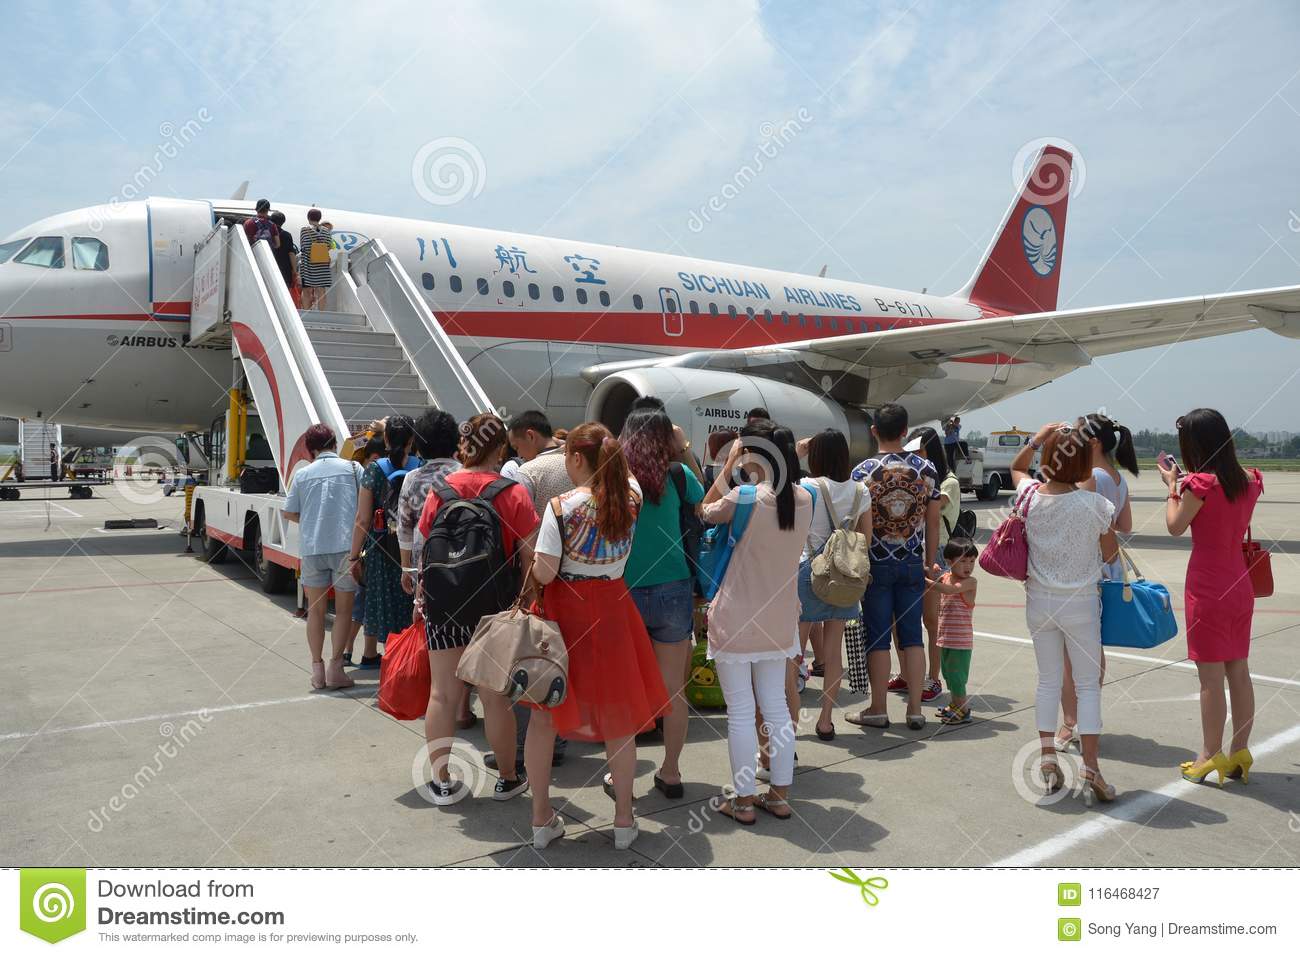 passengers-walking-boarding-planeã€‚-photo-taken-aug-th-passengers-boarding-plane-116468427.jpg